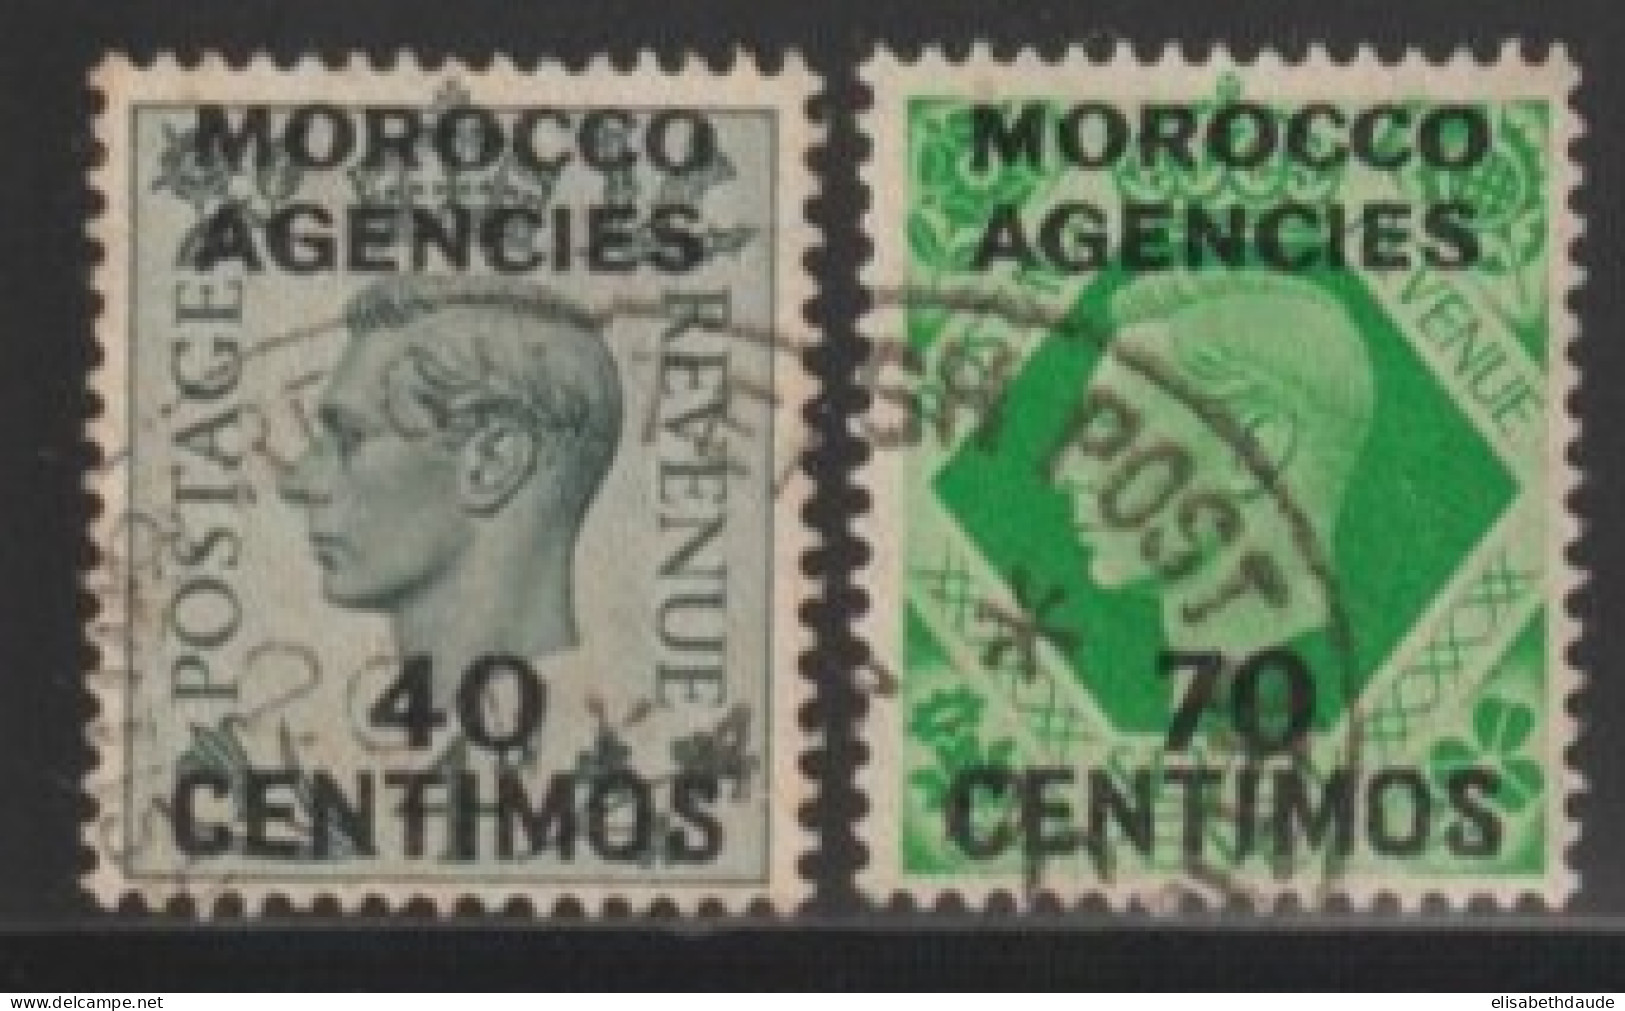 MAROC ANGLAIS ZONE ESPAGNOLE - 1937 - YVERT N° 75/76 OBLITERES - COTE = 25 EUR. - Morocco Agencies / Tangier (...-1958)